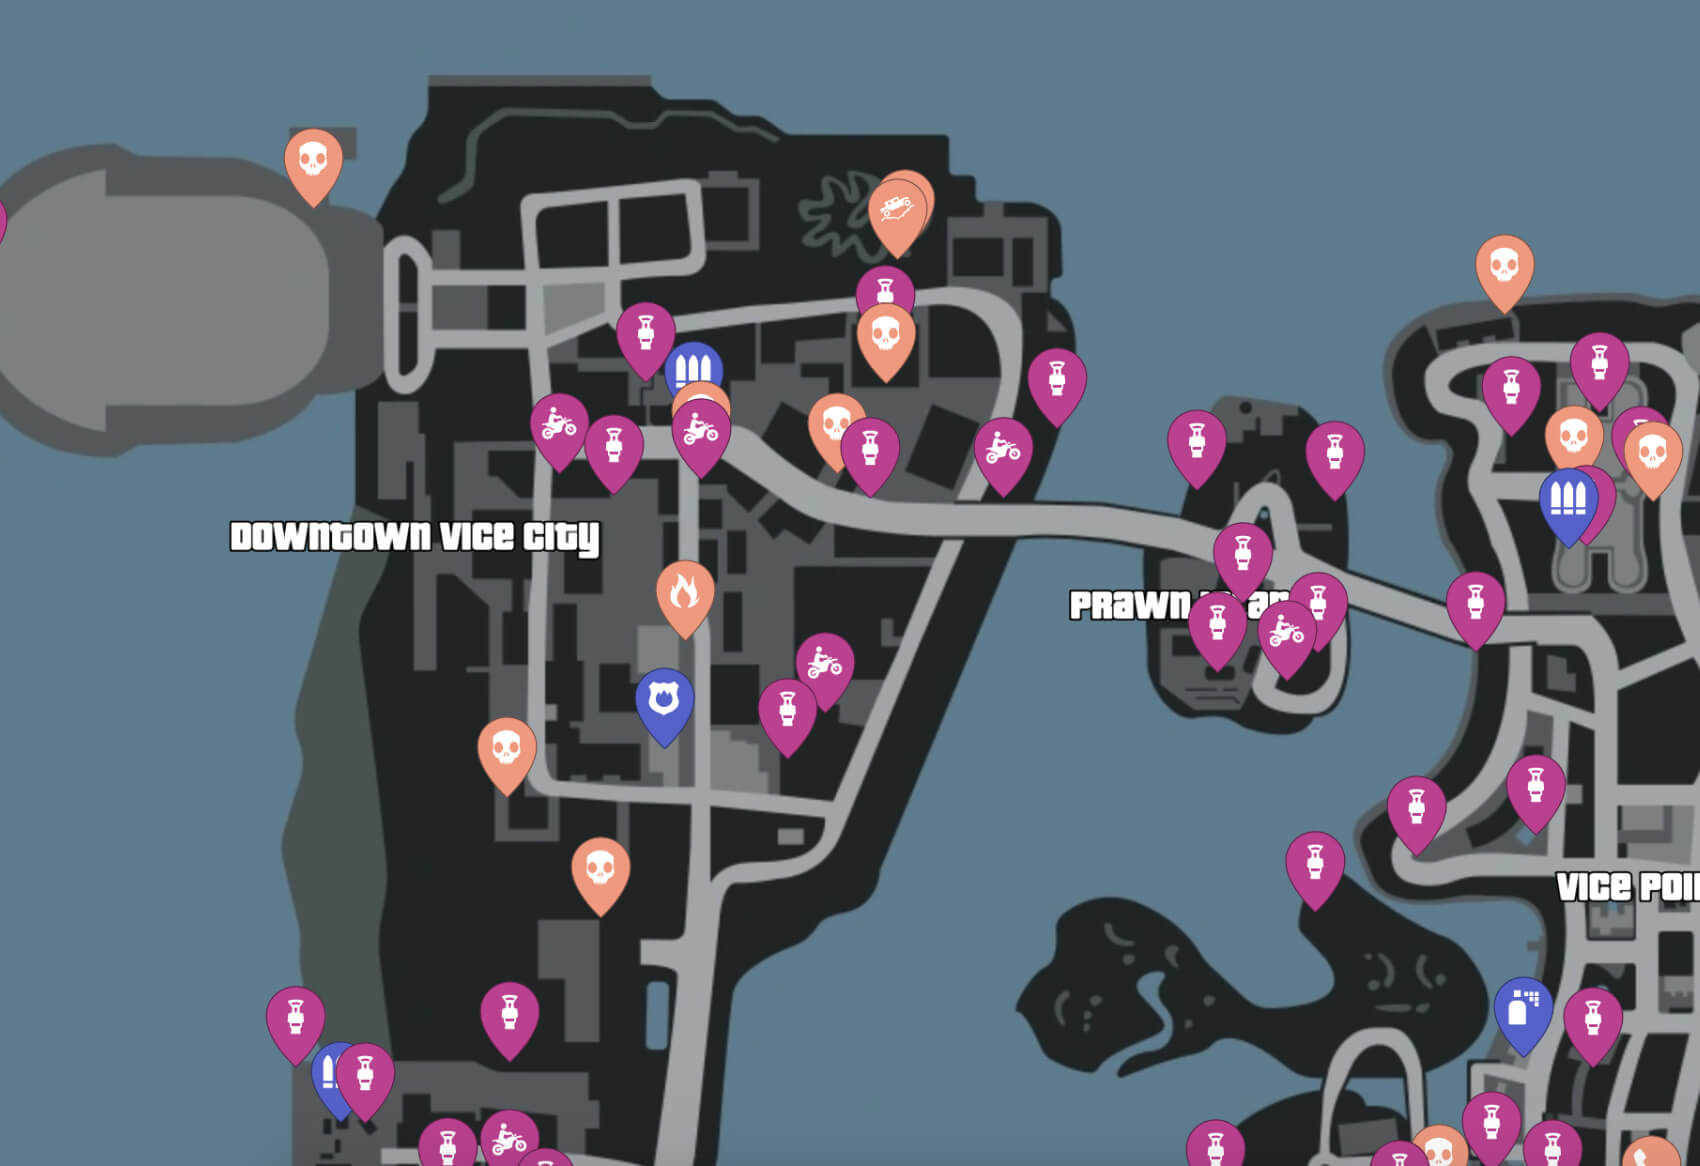 Grand Theft Auto: Vice City Map Image